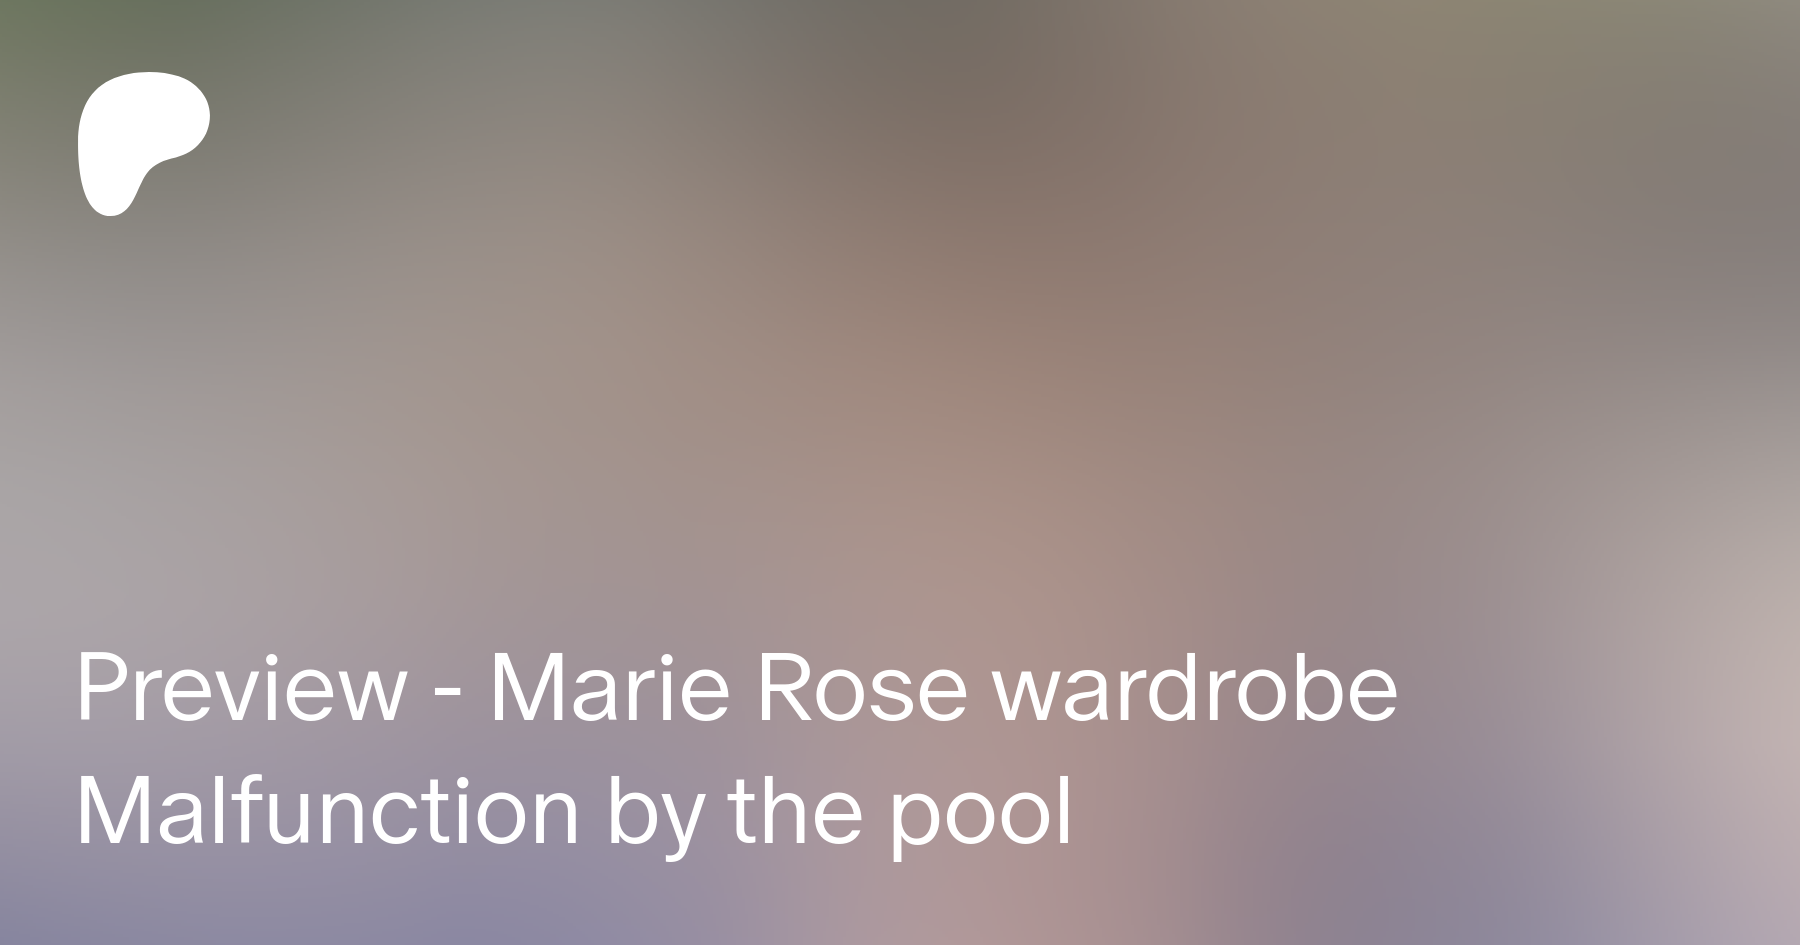 Marie rose wardrobe malfunction